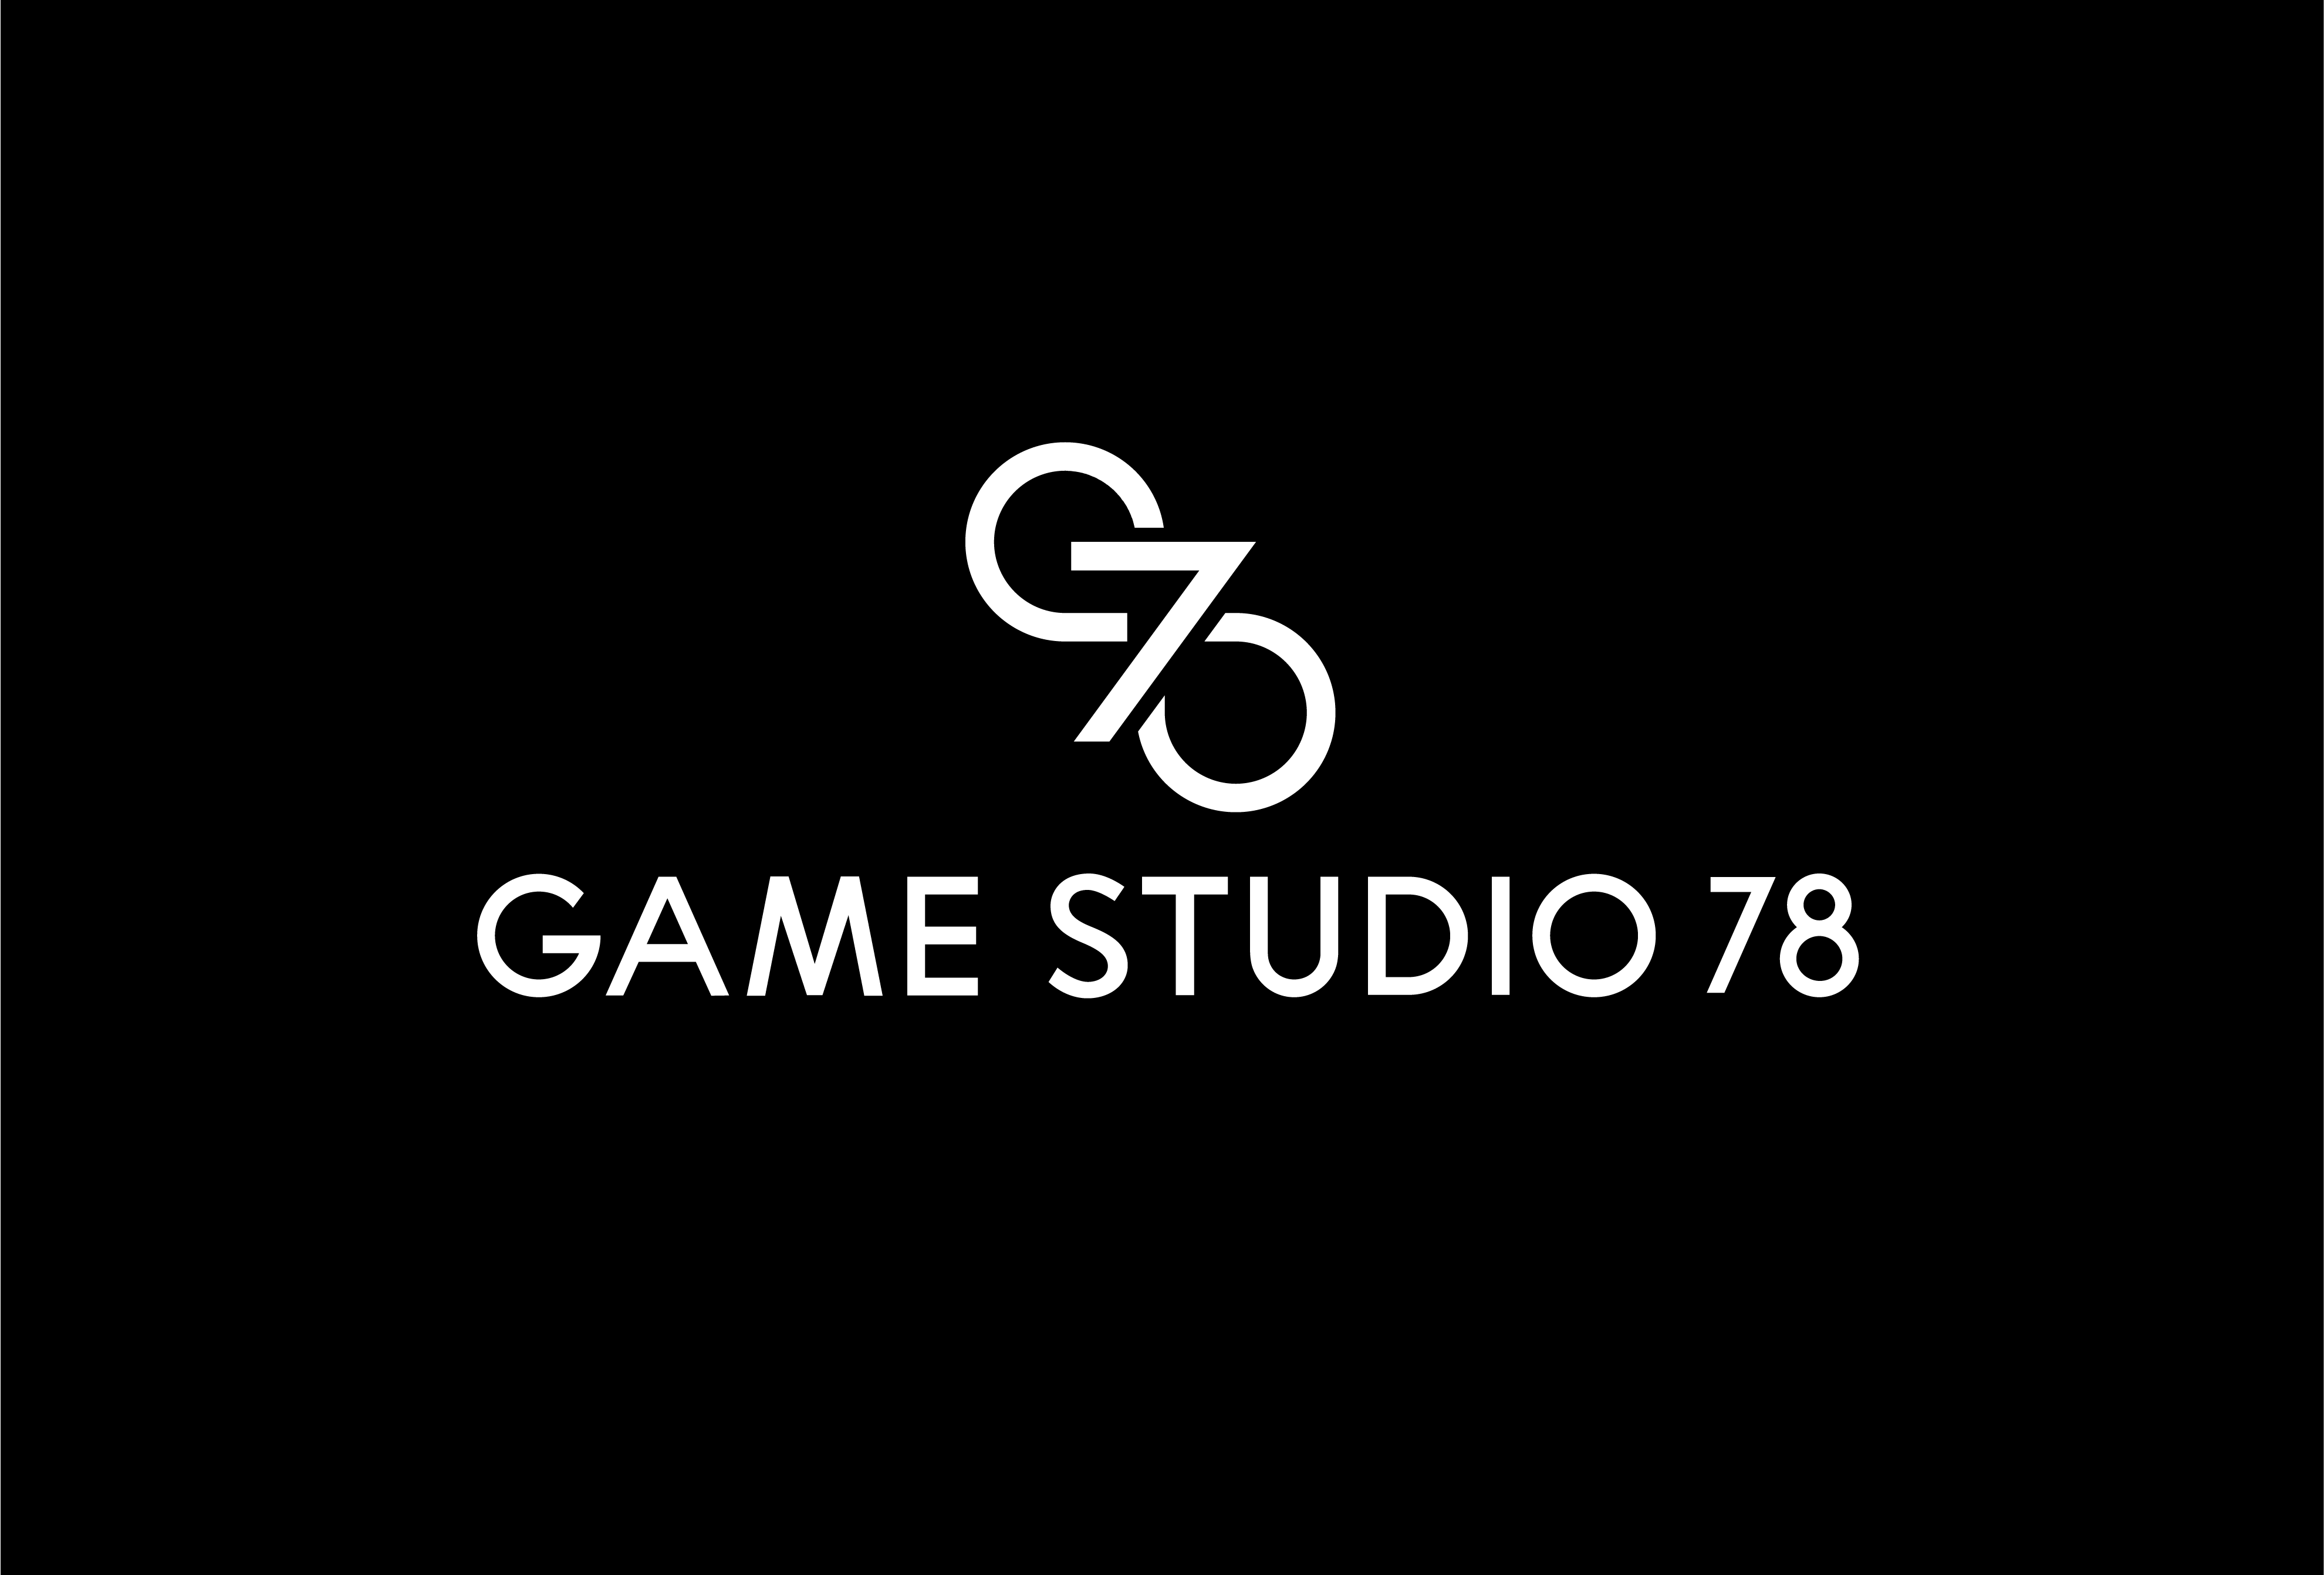 Game studio 3. Логотипы гейм студий. Игры Studios. Логотипы инди студий. Game Studio.